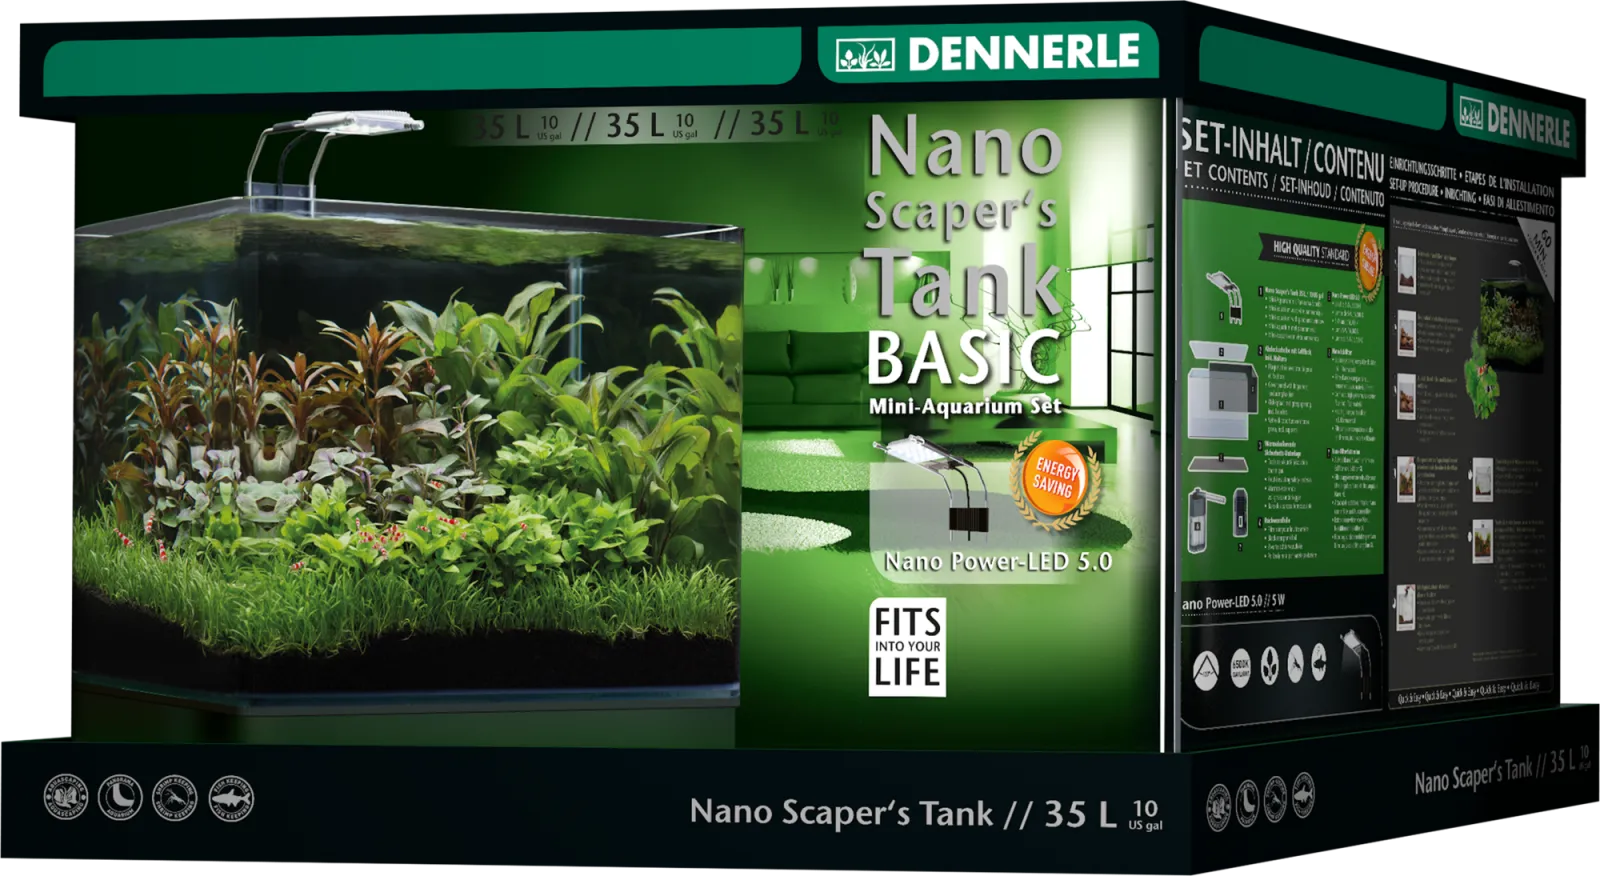 DENNERLE NANO SCAPER'S TANK 35L BASIC